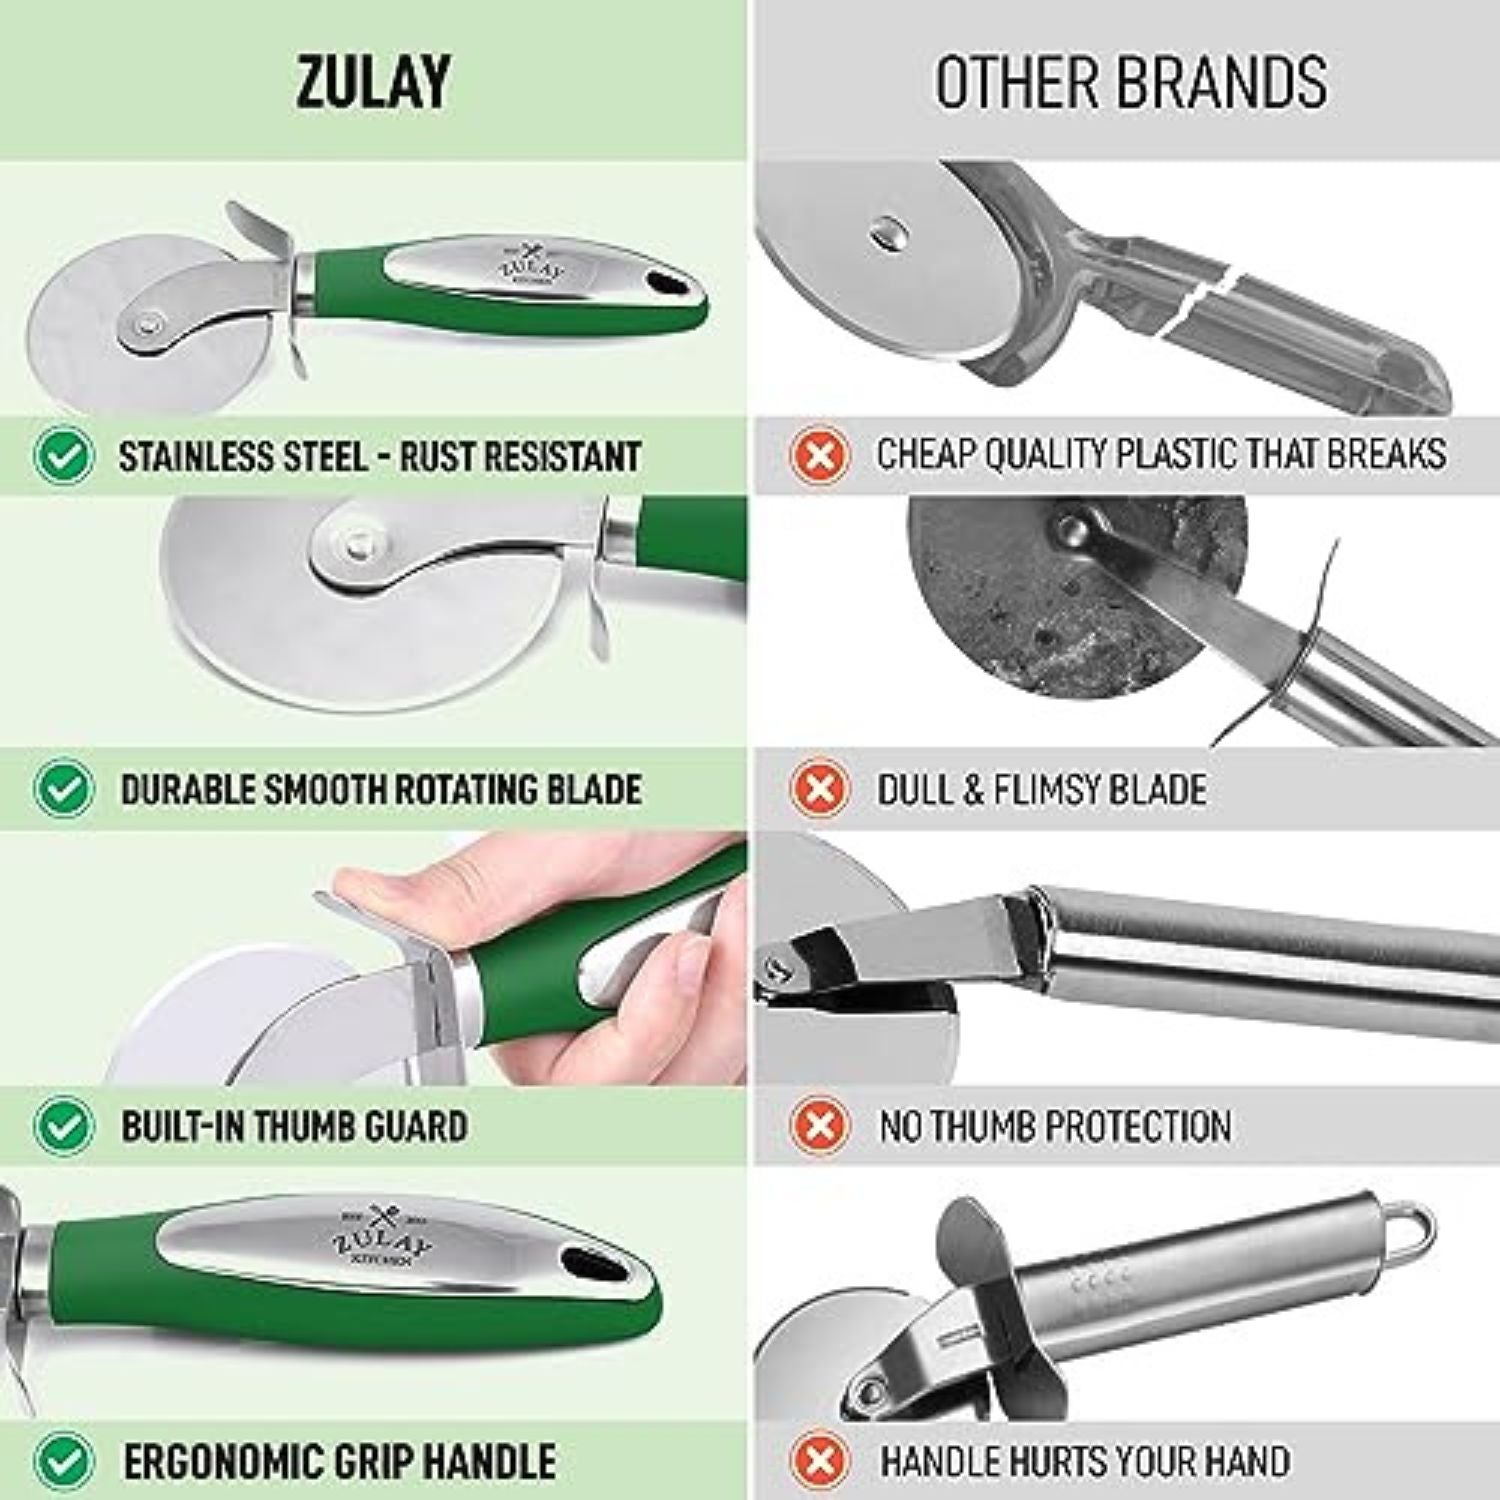 Zulay Kitchen Multi-Purpose Stainless Steel Bench Scraper & Chopper